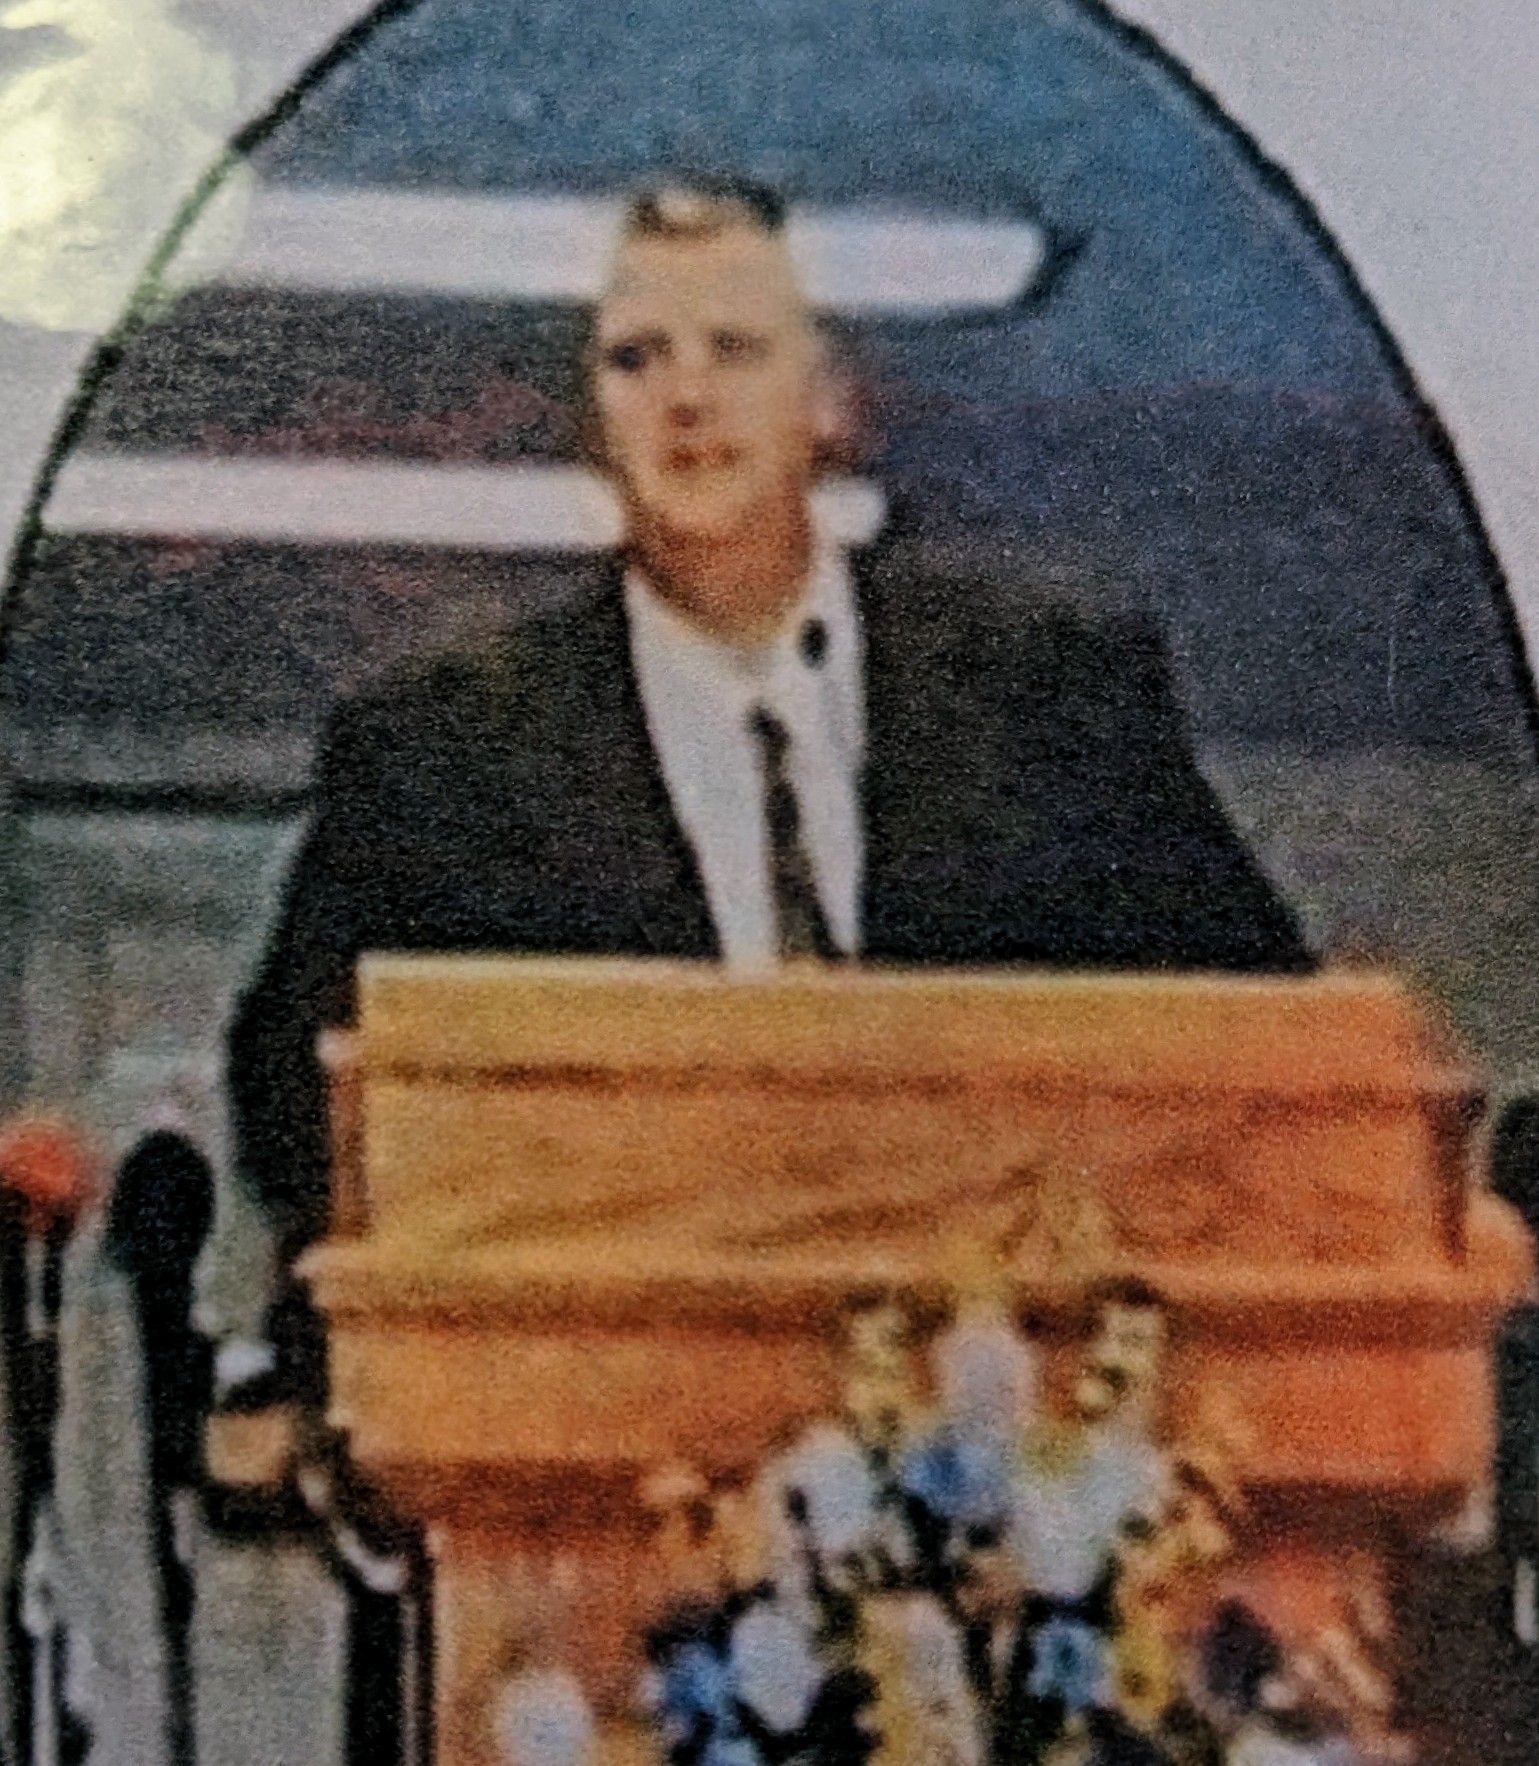 Rev. Jeff Simpson